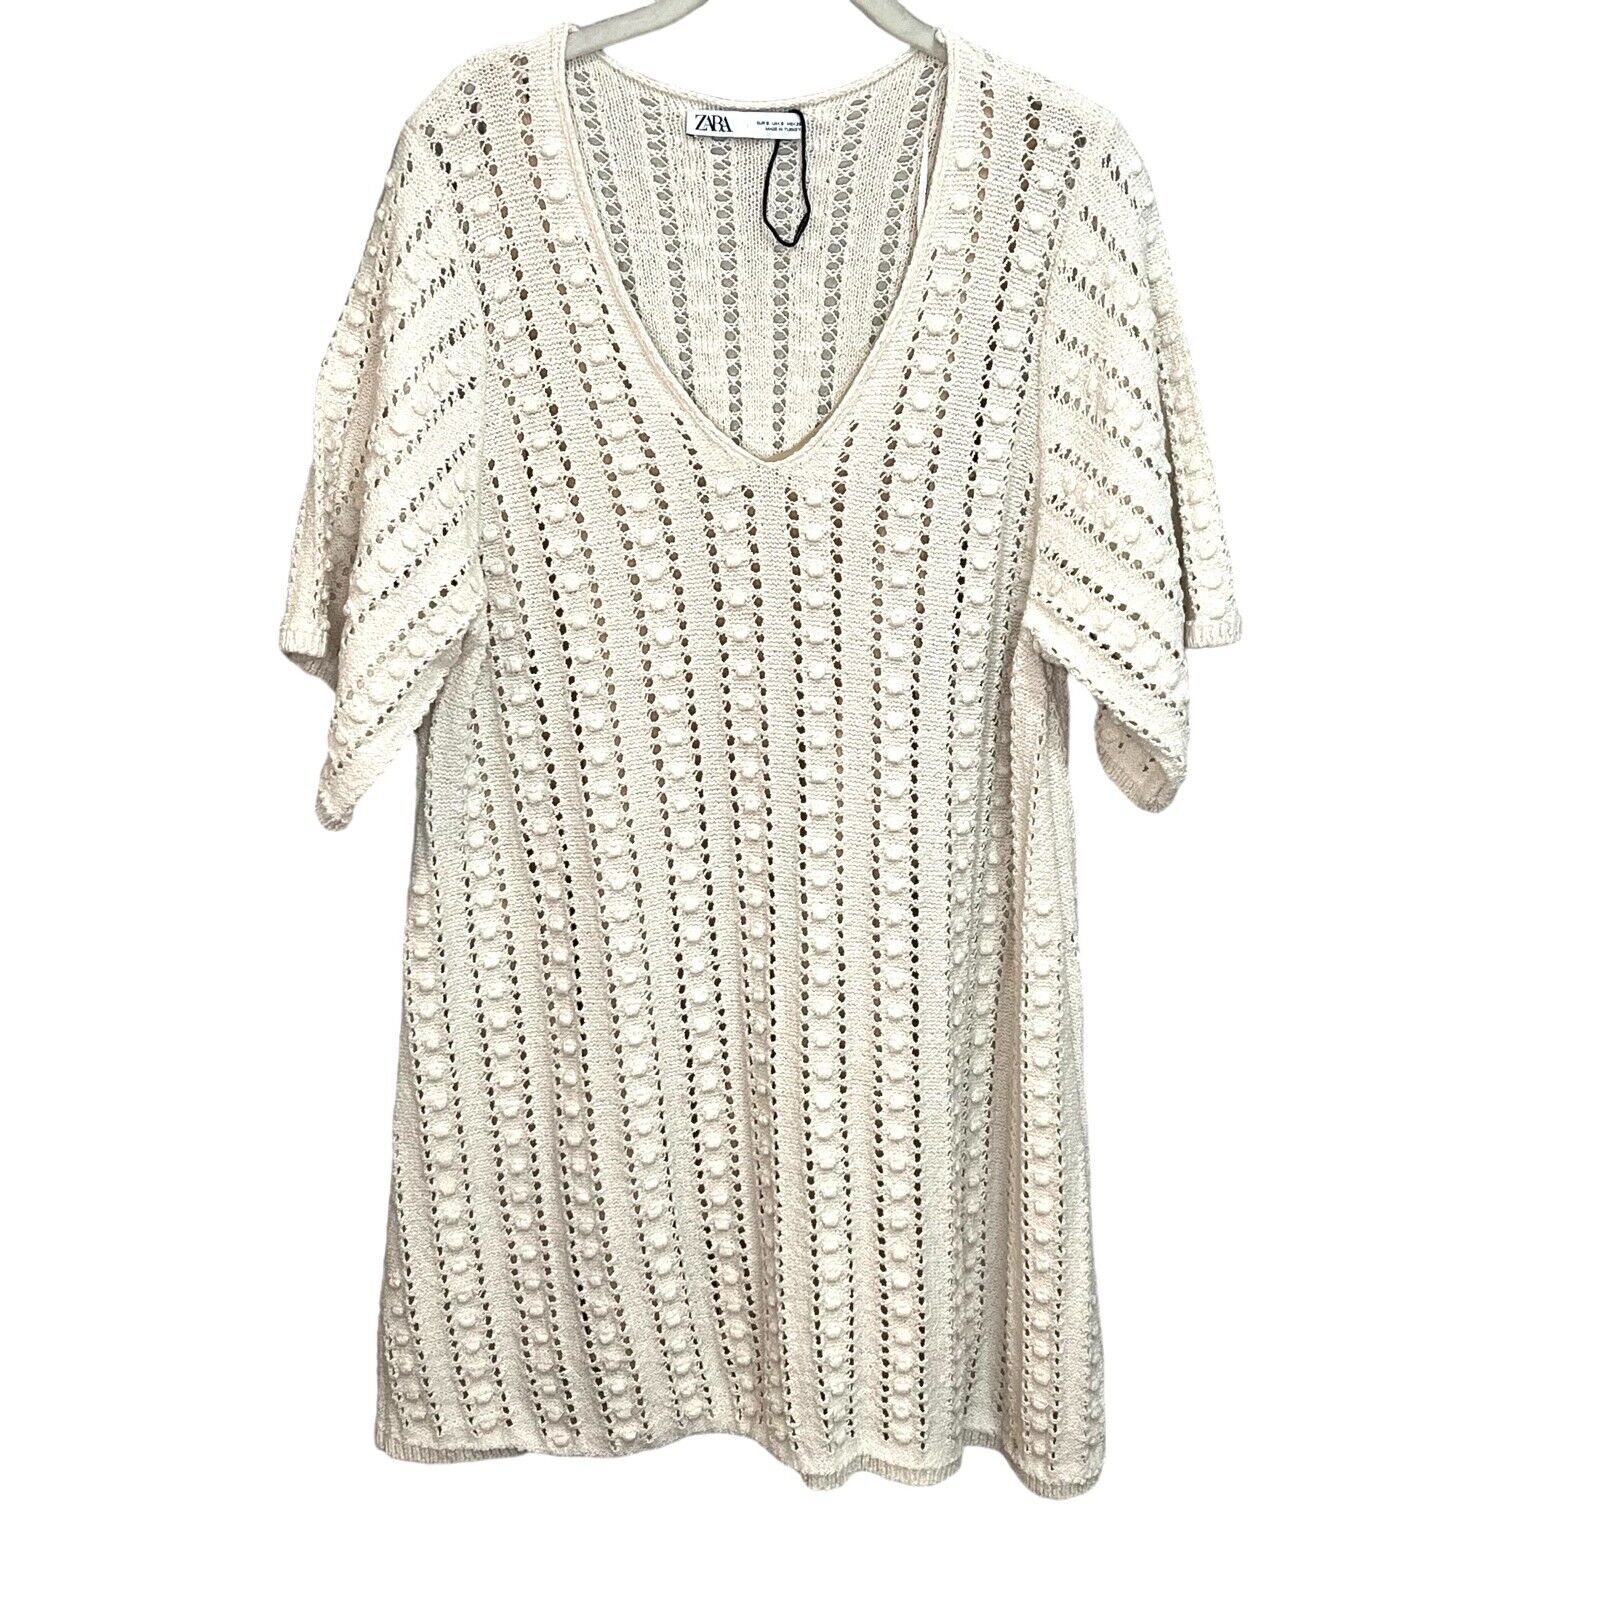 Zara Ivory Cream Short Sleeve Knit Crochet Dress with Slip Size Small NWOT